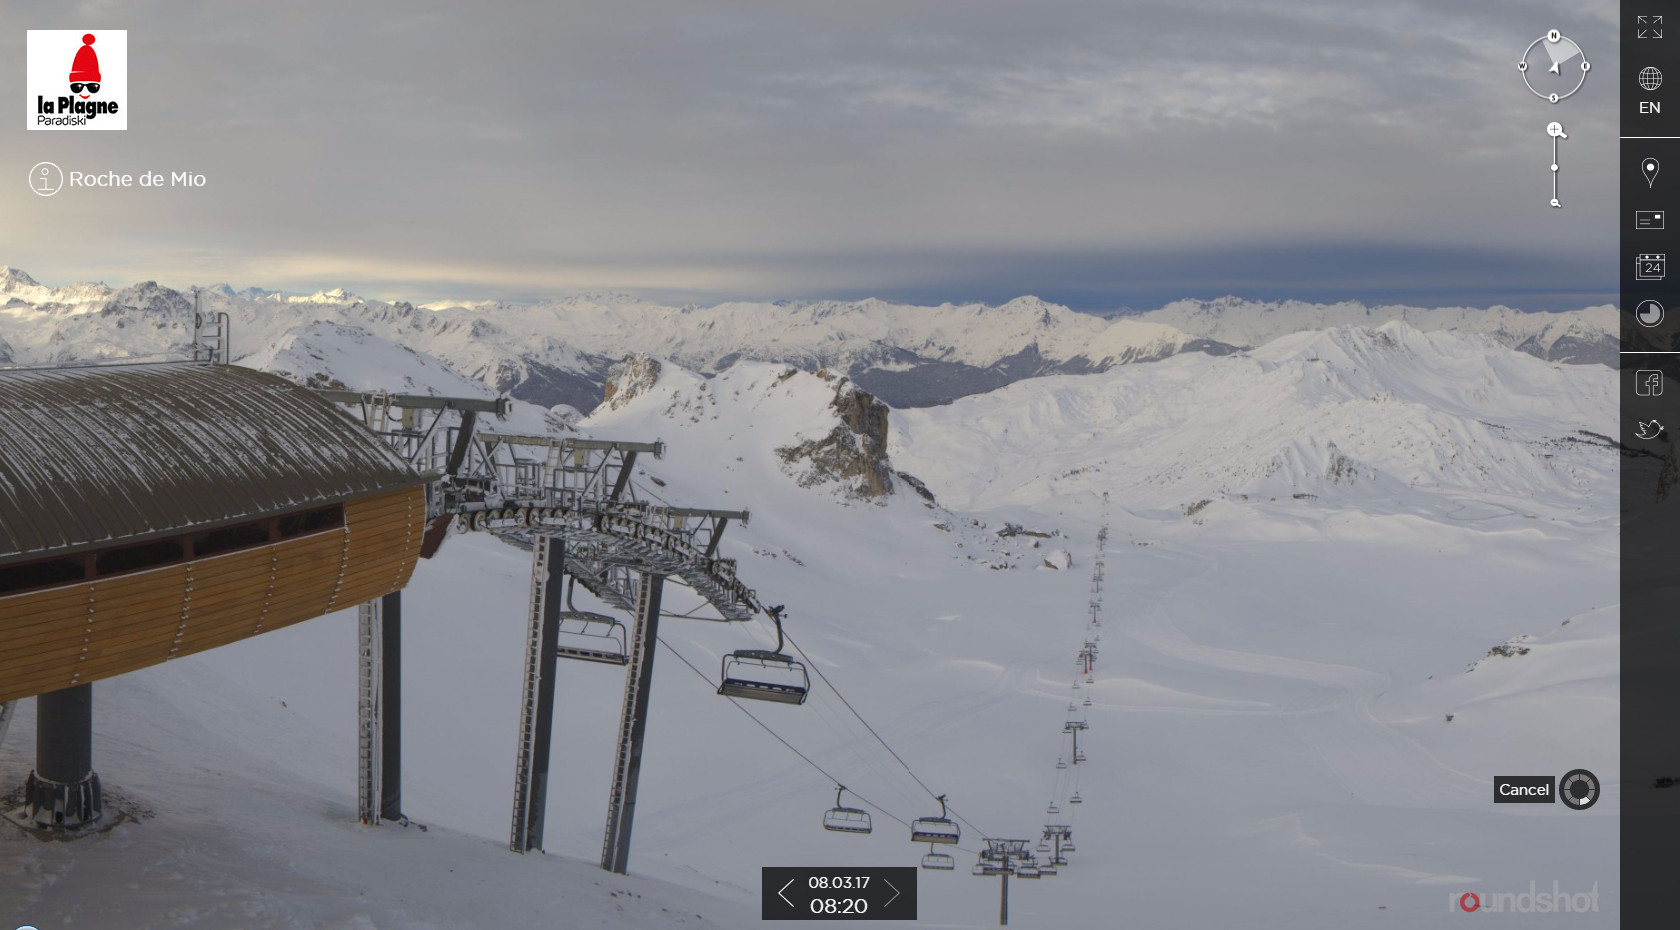 Ski resort, La Plagne, Alps